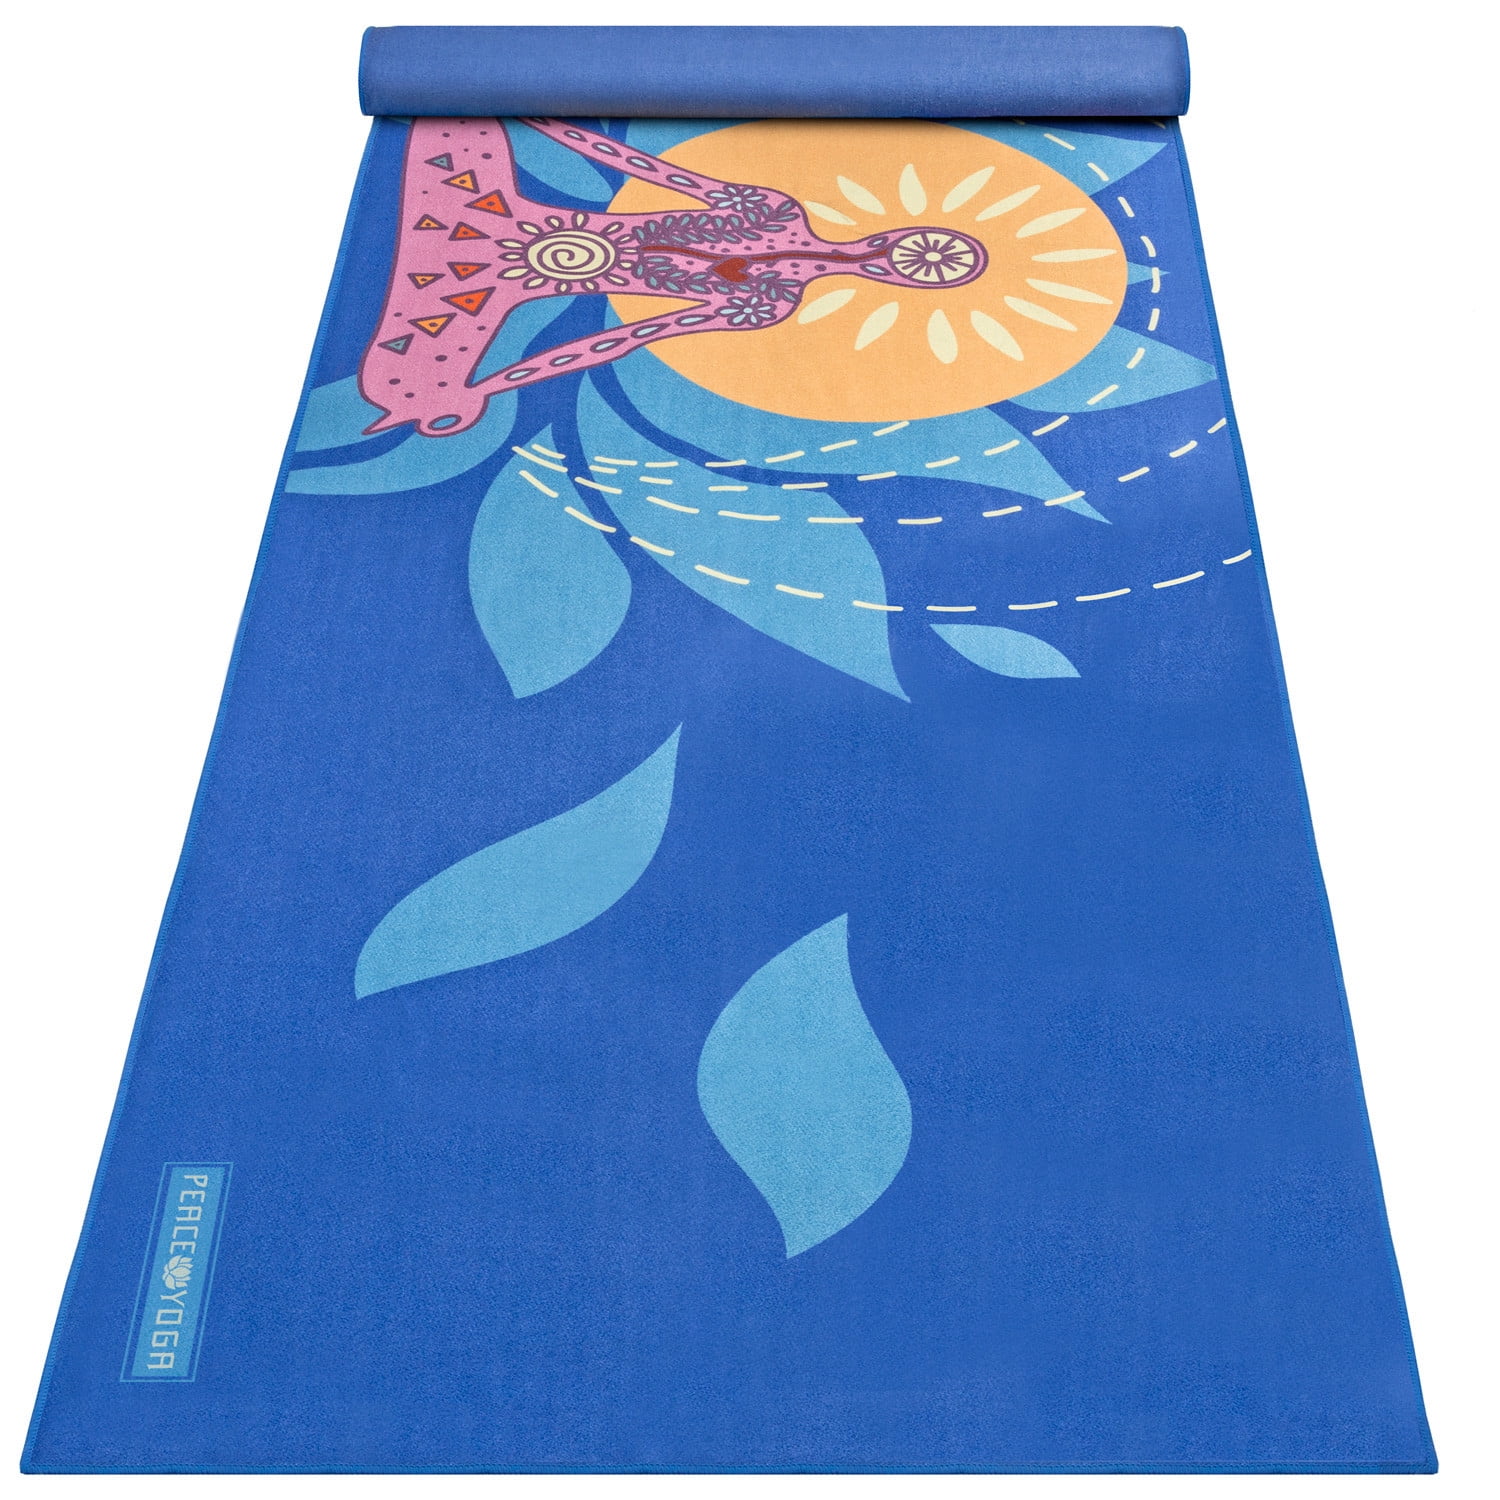 Soft-Perfect Microfiber Skidless Bikram Hot Yoga Mat Towel for Fitness Exercise Sports& Outdoors Travel Bag Hot Yoga Towel Zoegate Non Slip Yoga Hand Towel Ultra Absorbent